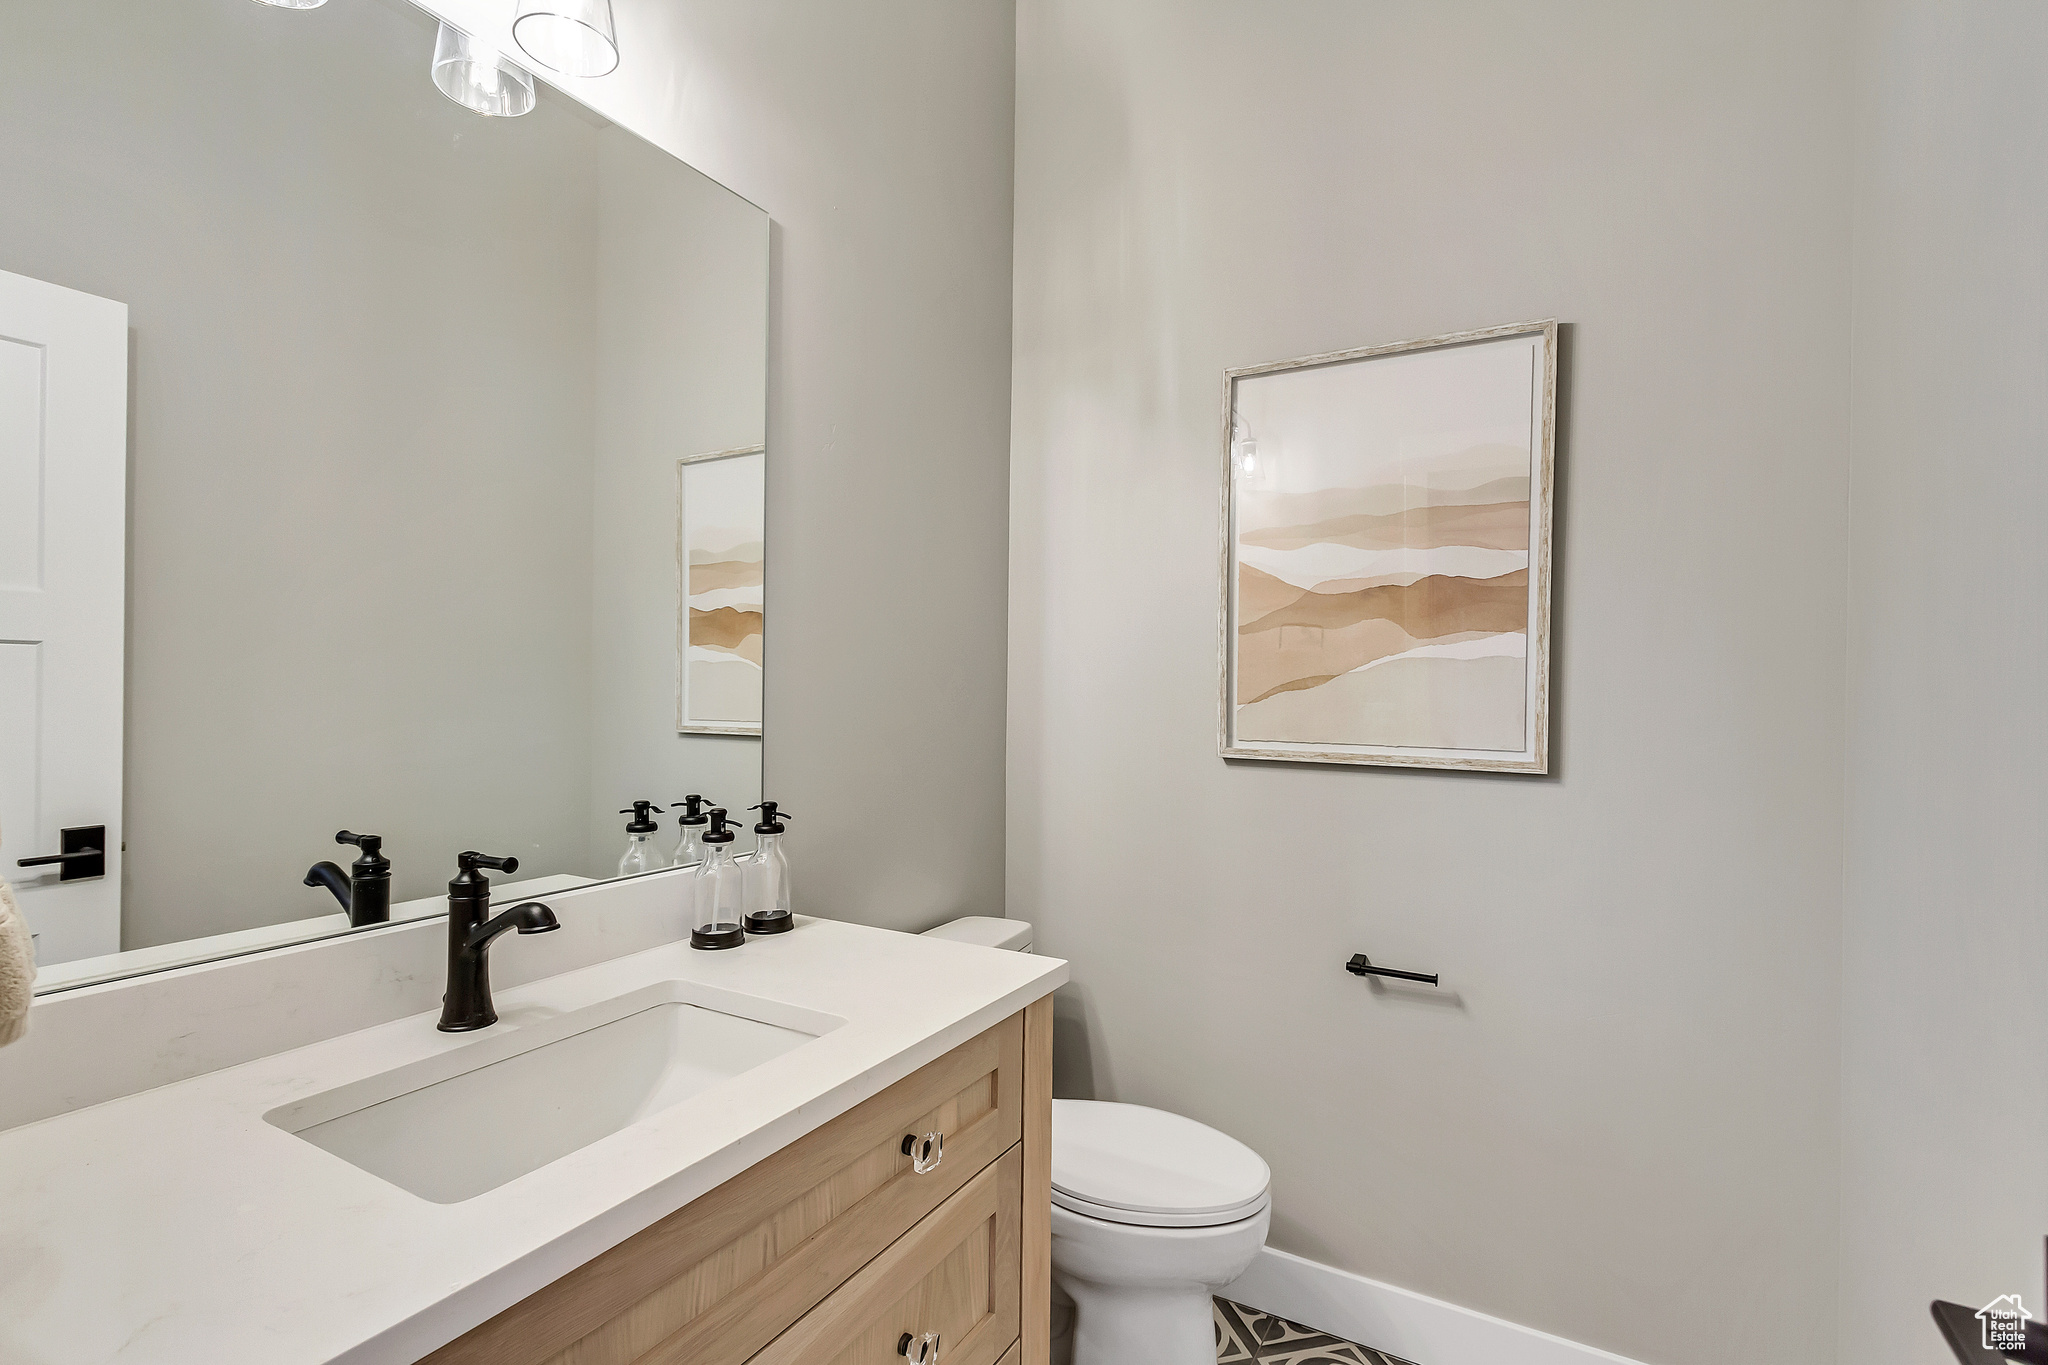 Bathroom featuring tile floors, toilet, and vanity